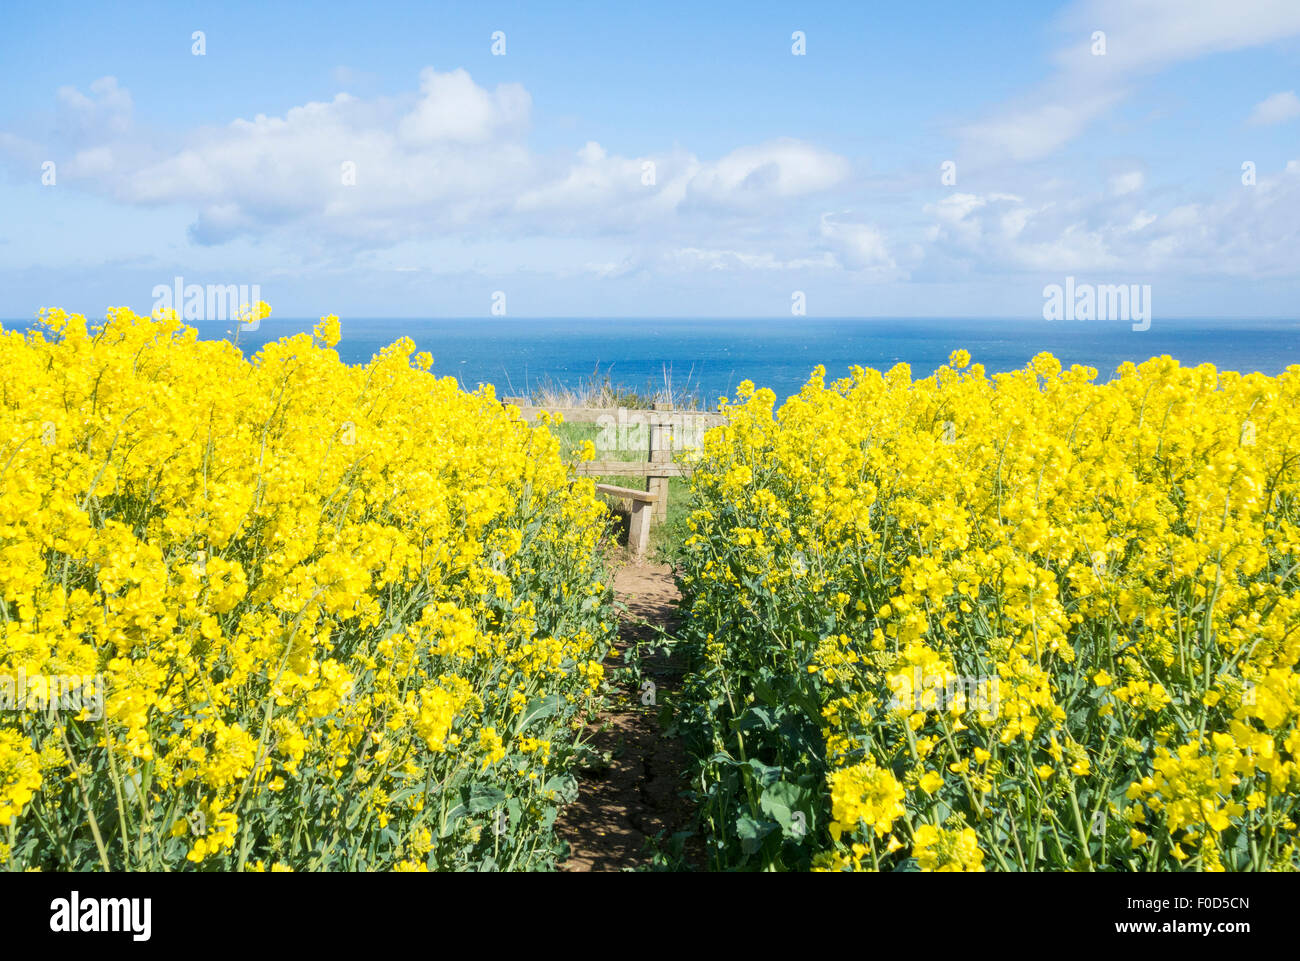 Public footpath through Rapeseed crop in field overlooking sea. UK Stock Photo